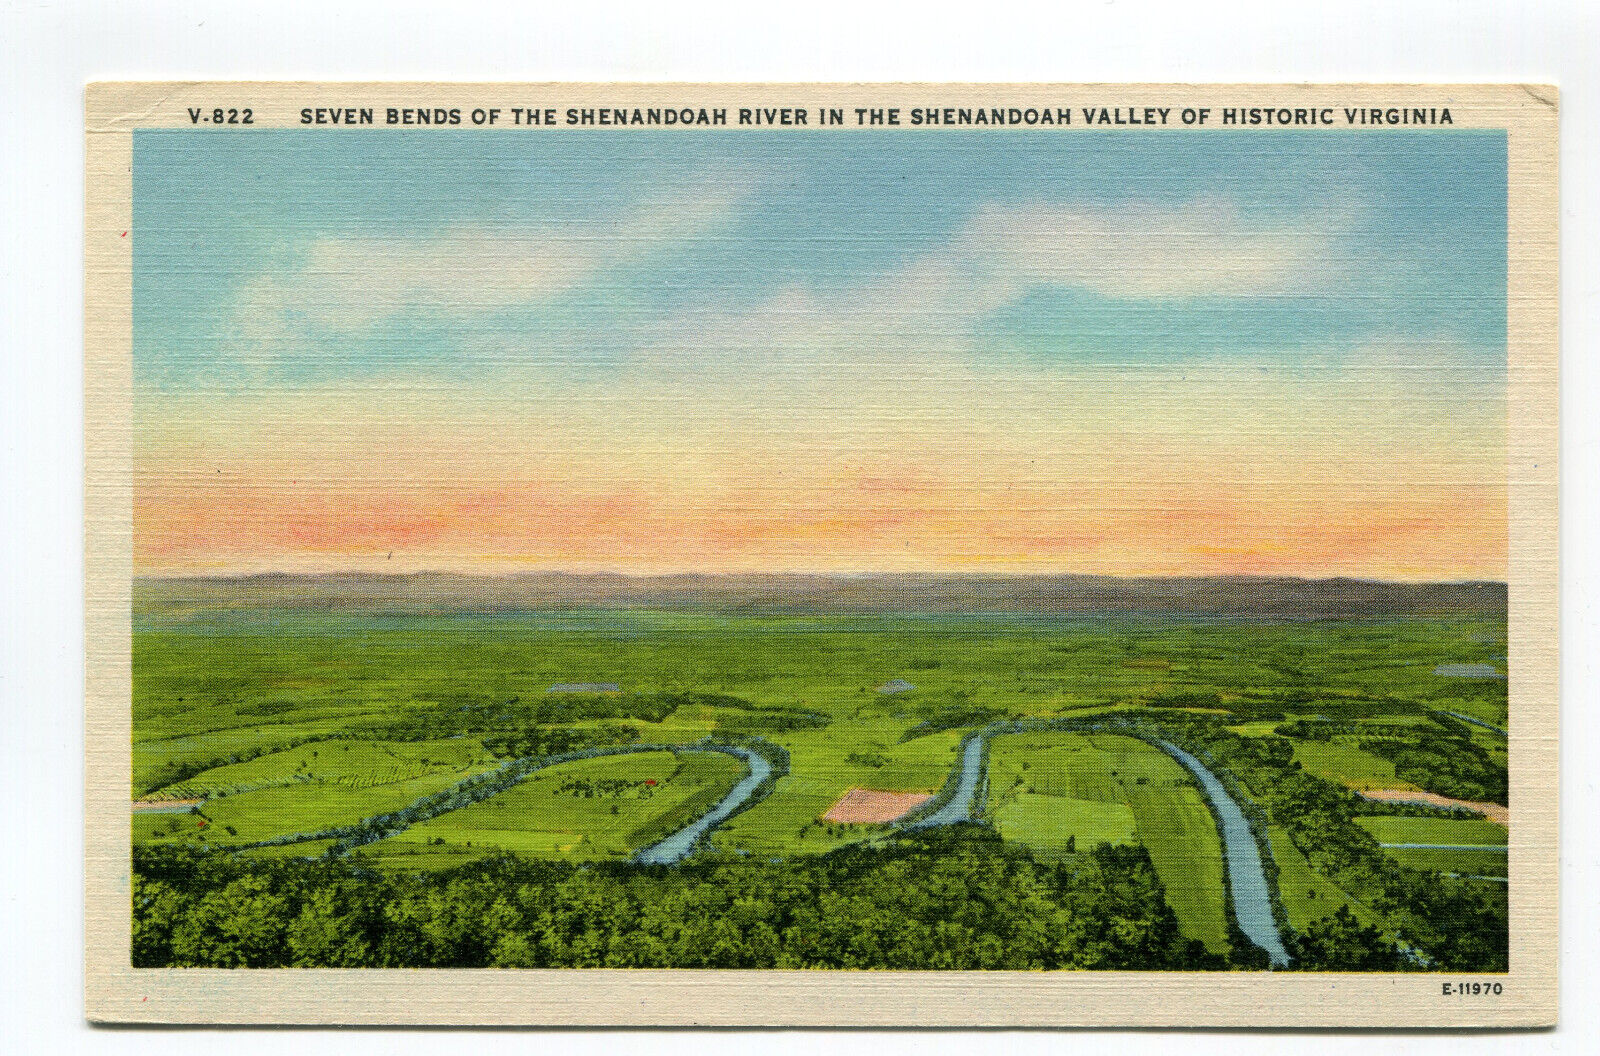 SEVEN BENDS OF THE SHENANDOAH RIVER IN SHENANDOAH VALLEY OF HISTORIC VIRGINIA